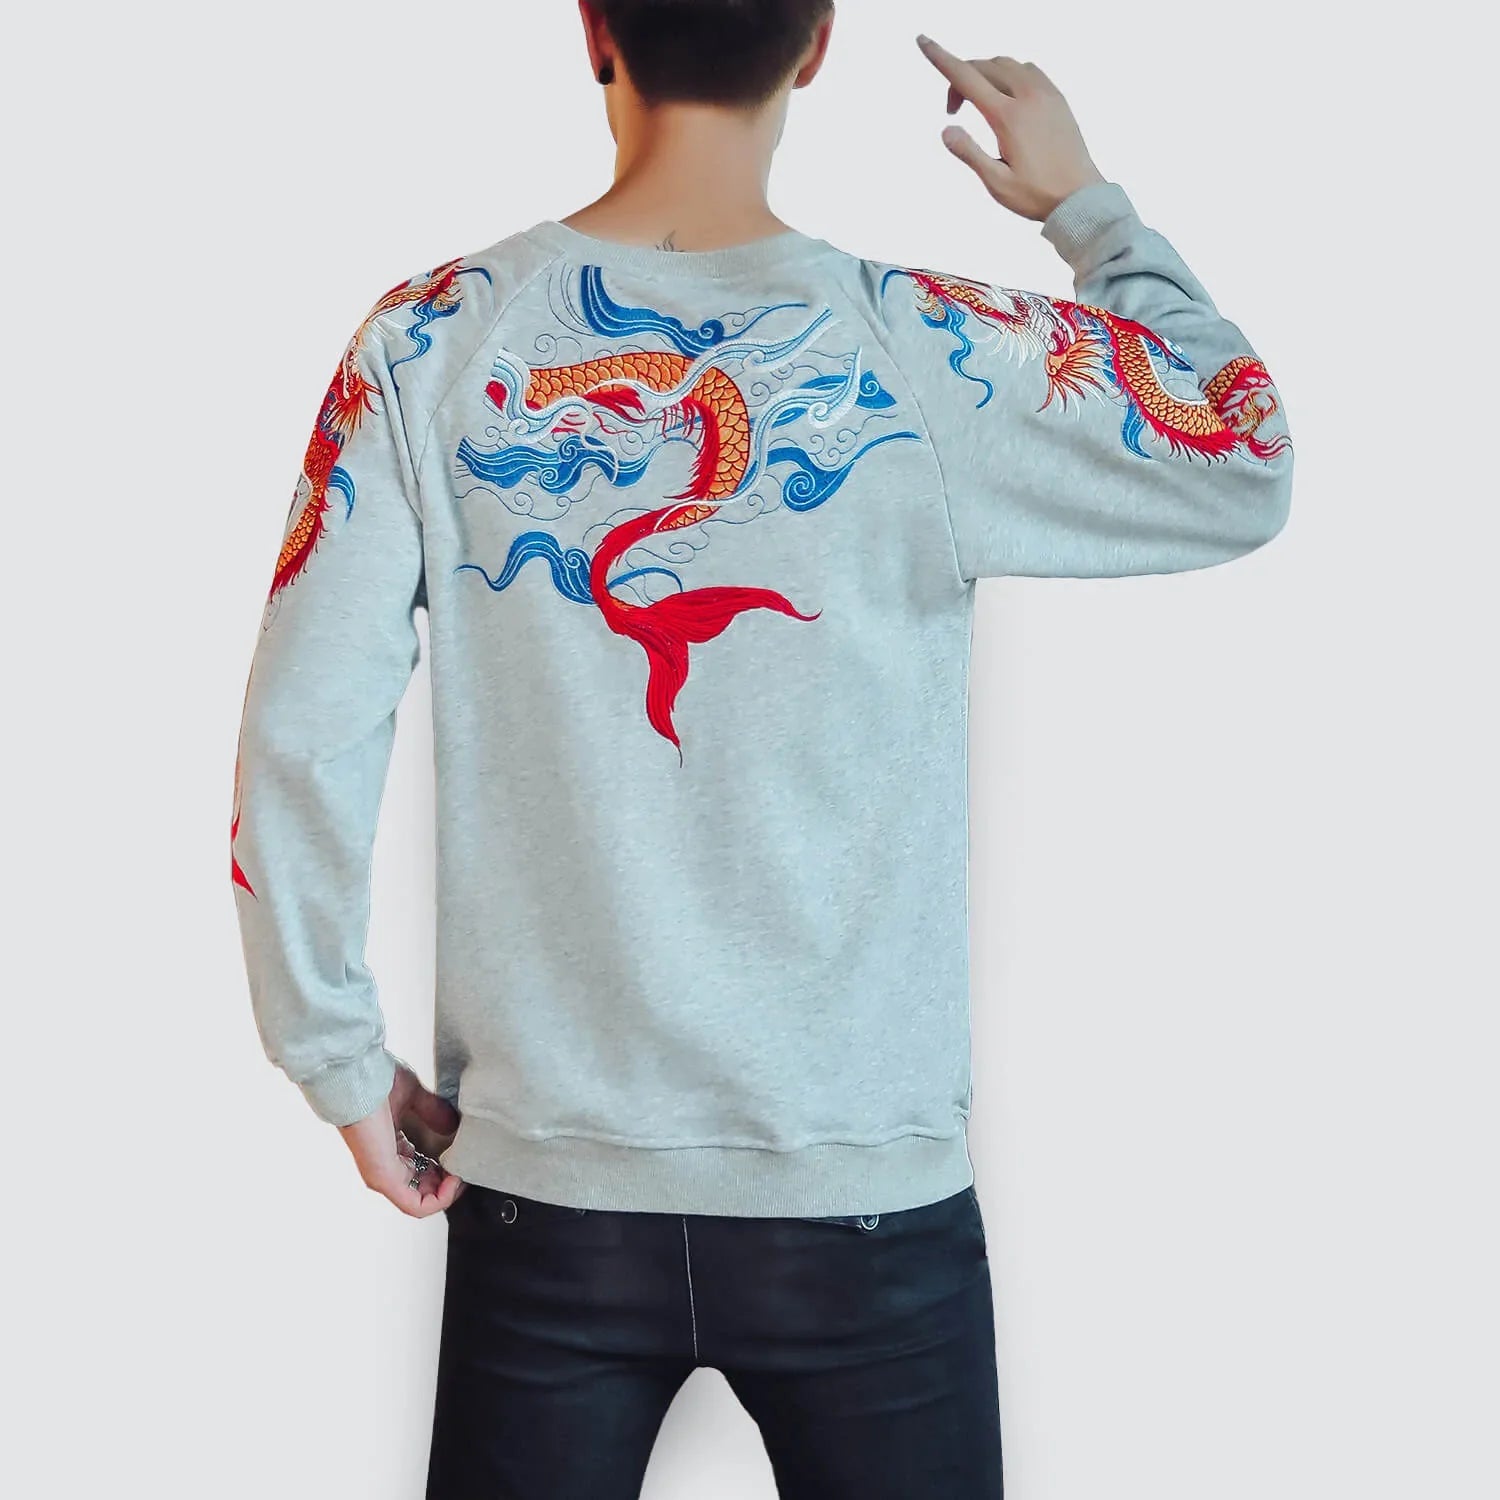 Dansu Dragon Sweatshirt Streetwear Brand Techwear Combat Tactical YUGEN THEORY